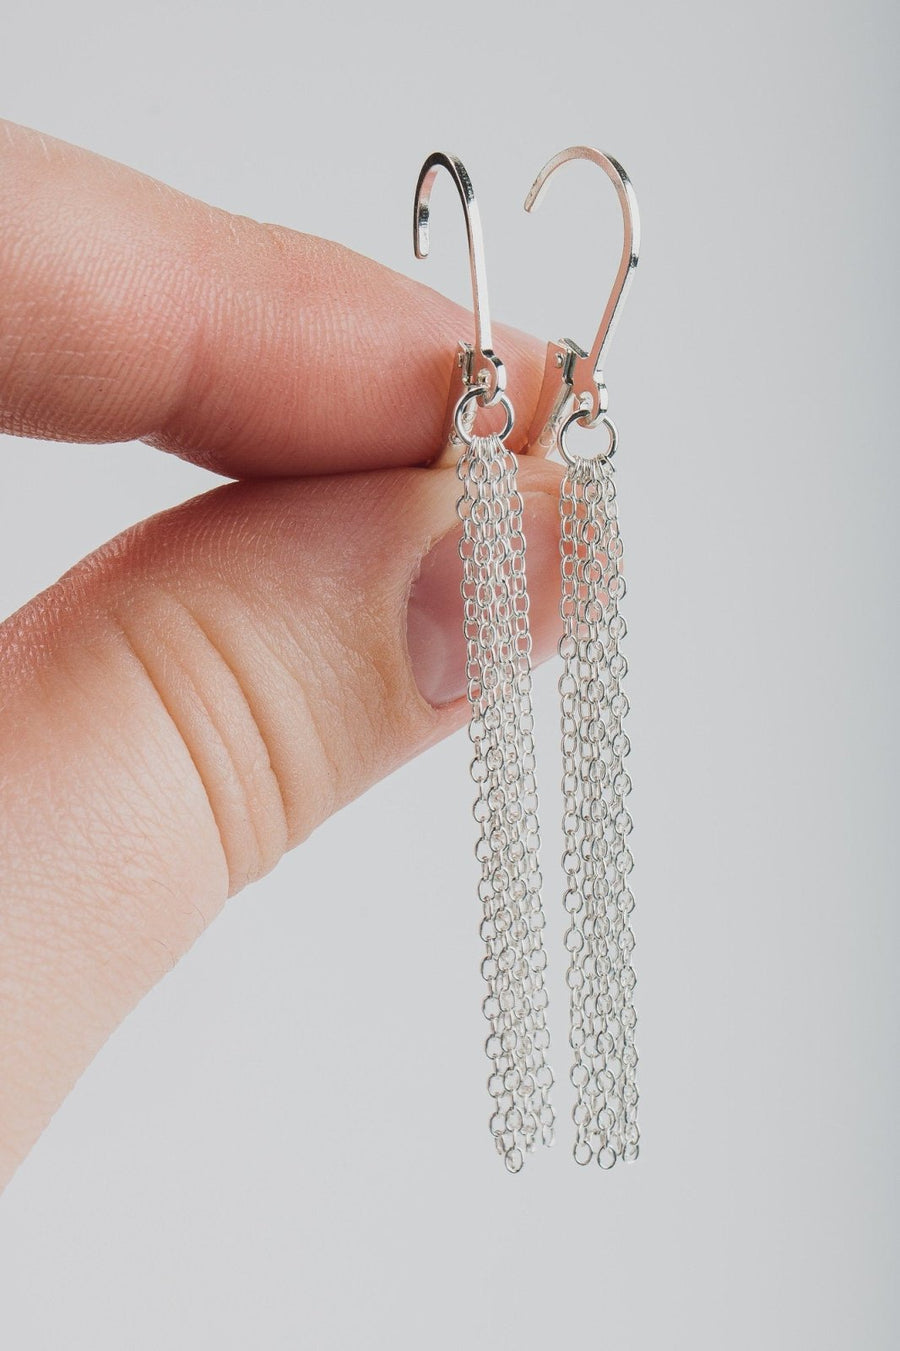 Chain Tassel Leverback Earrings - Melanie Golden Jewelry - dangle earrings, drop earrings, earrings